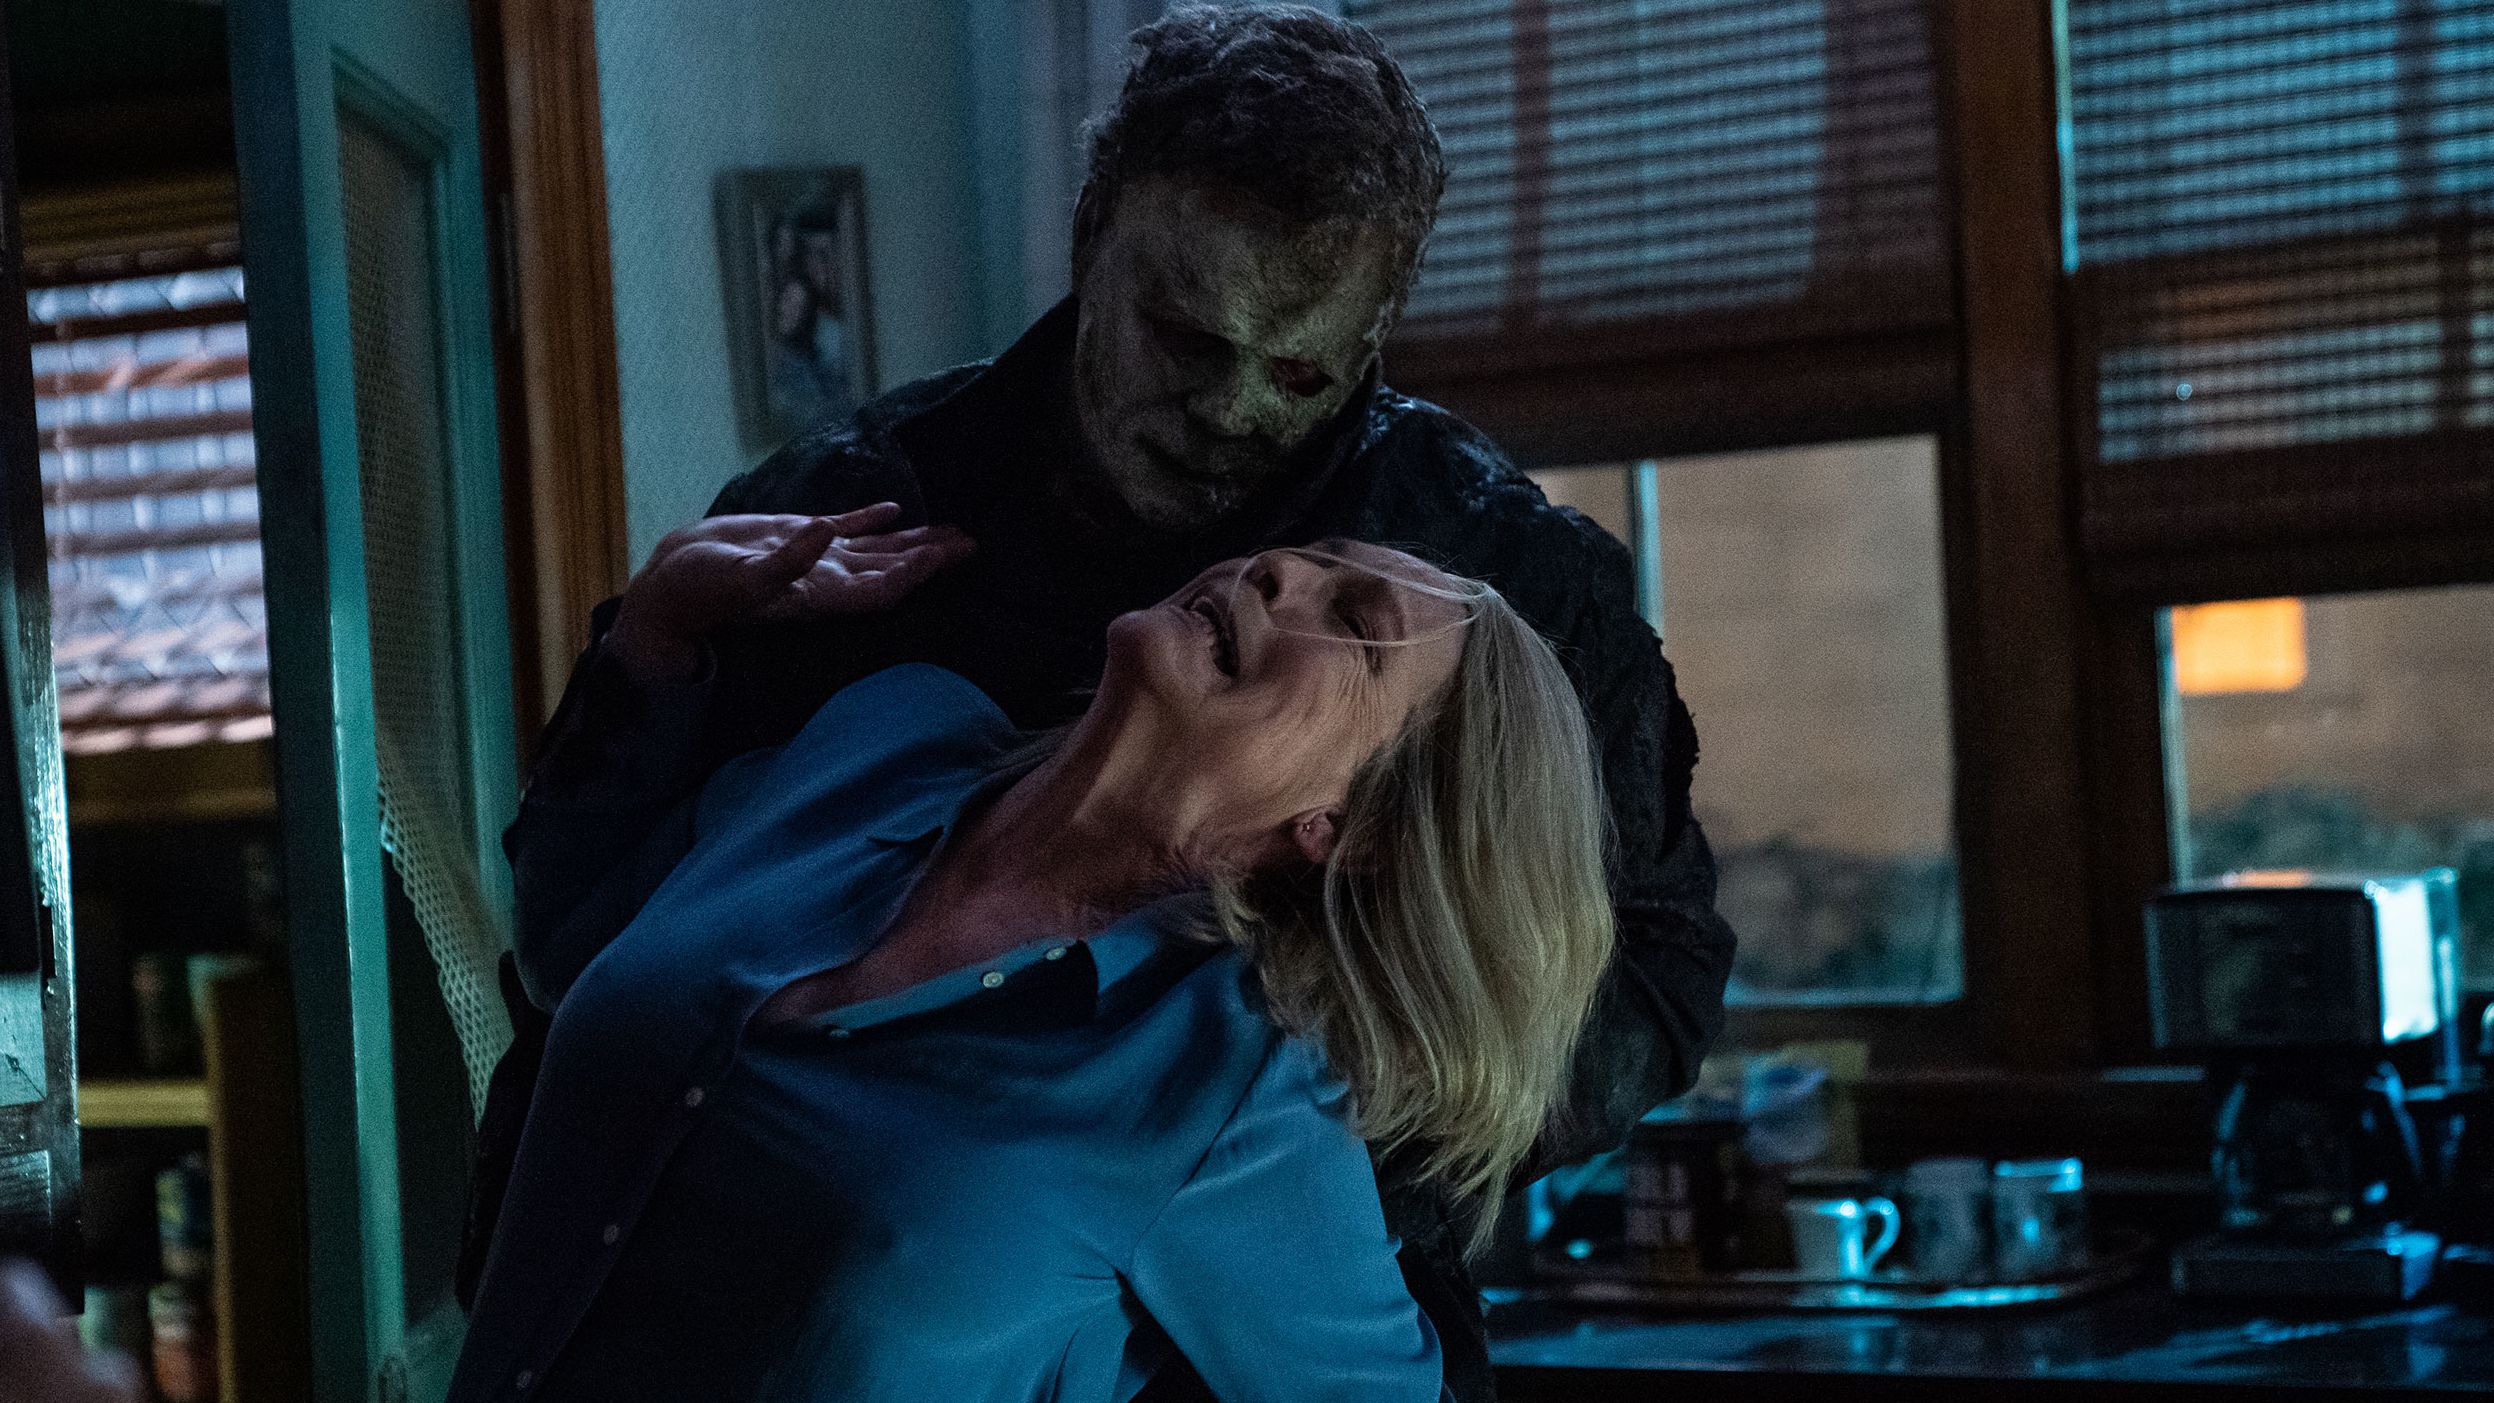 Jamie Lee Curtis' Laurie Strode is again imperiled in 'Halloween Ends.'